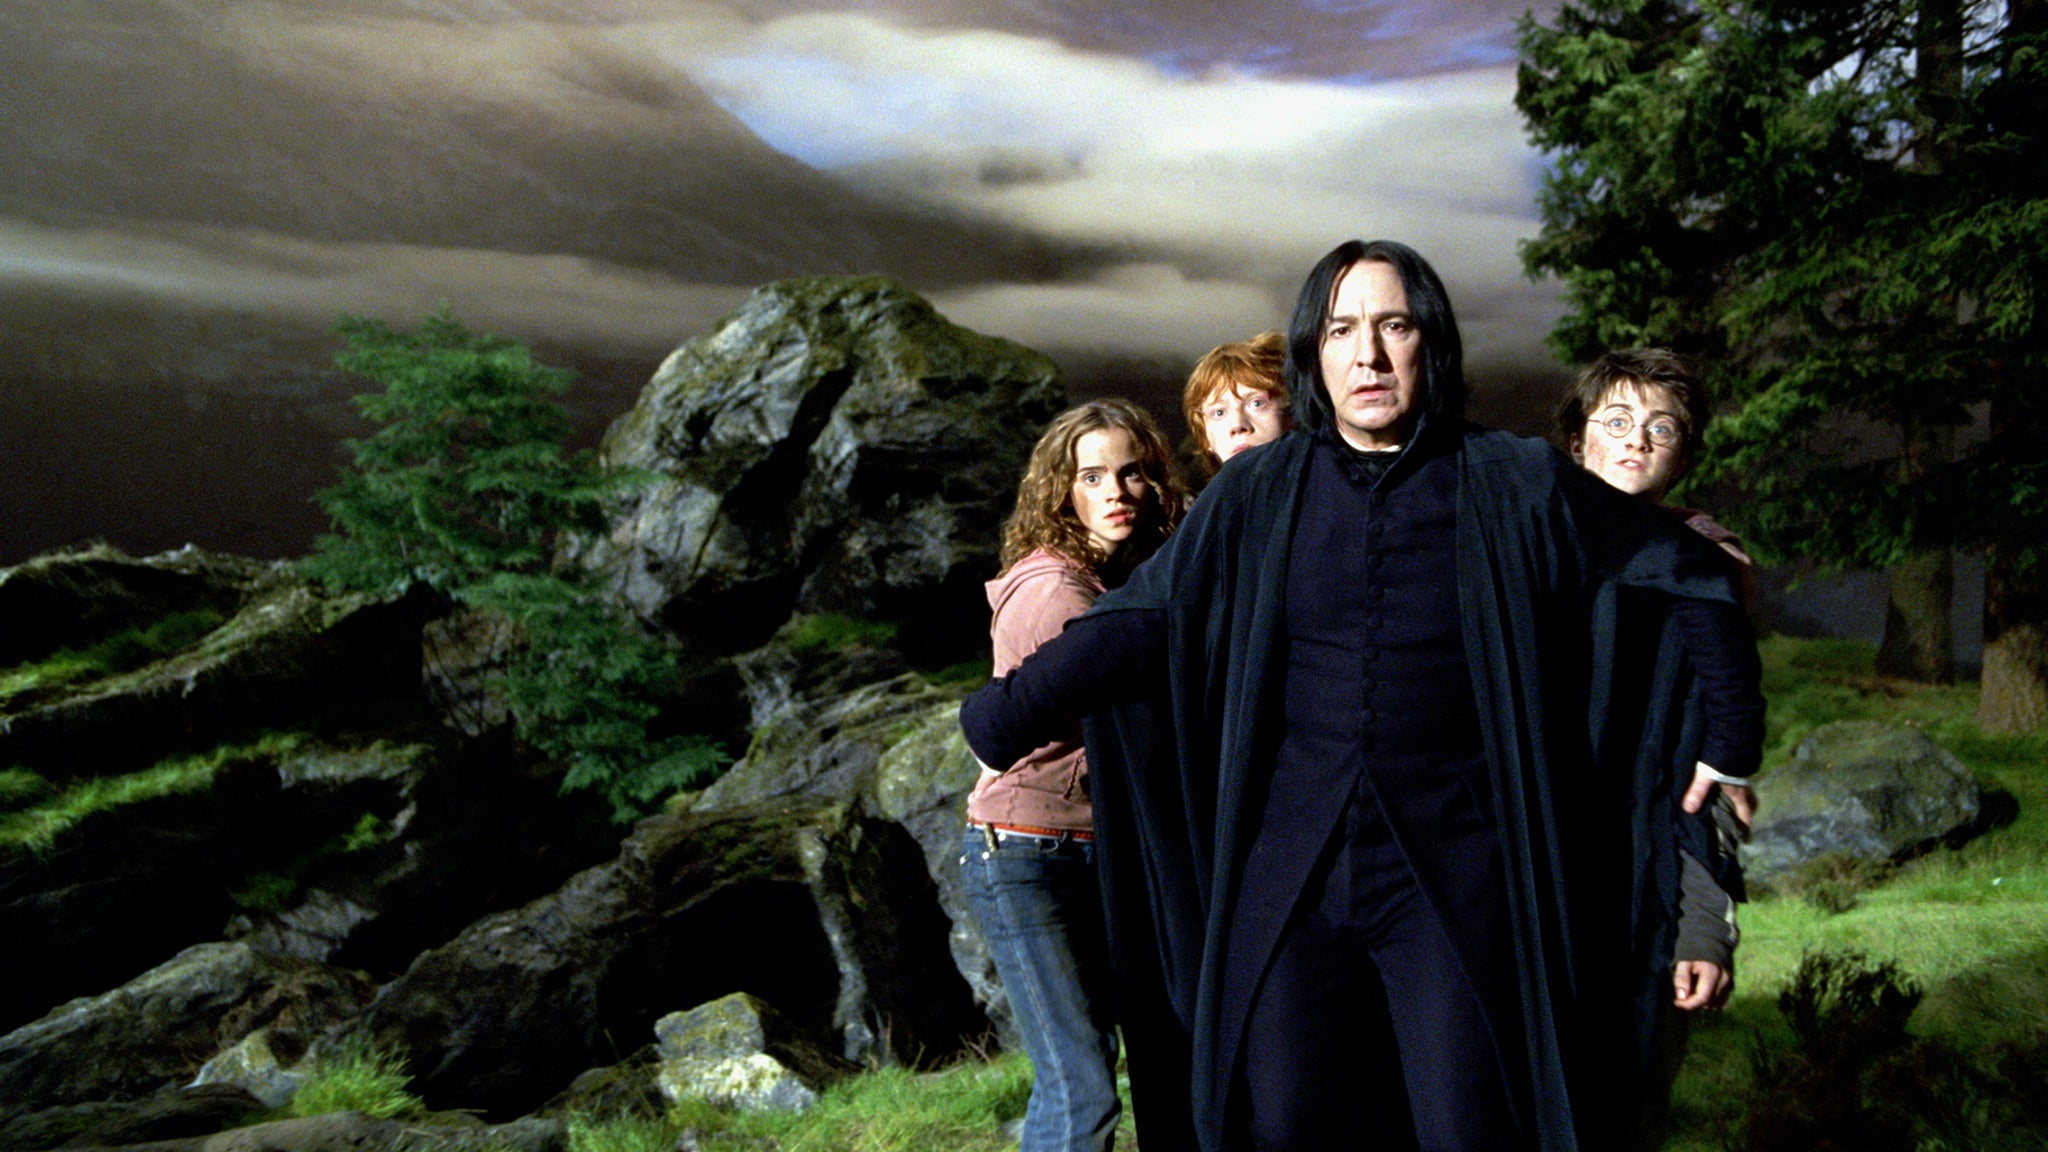 Harry Potter and the Prisoner of Azkaban (TM) in Concert in Calgary promo photo for VIP presale offer code